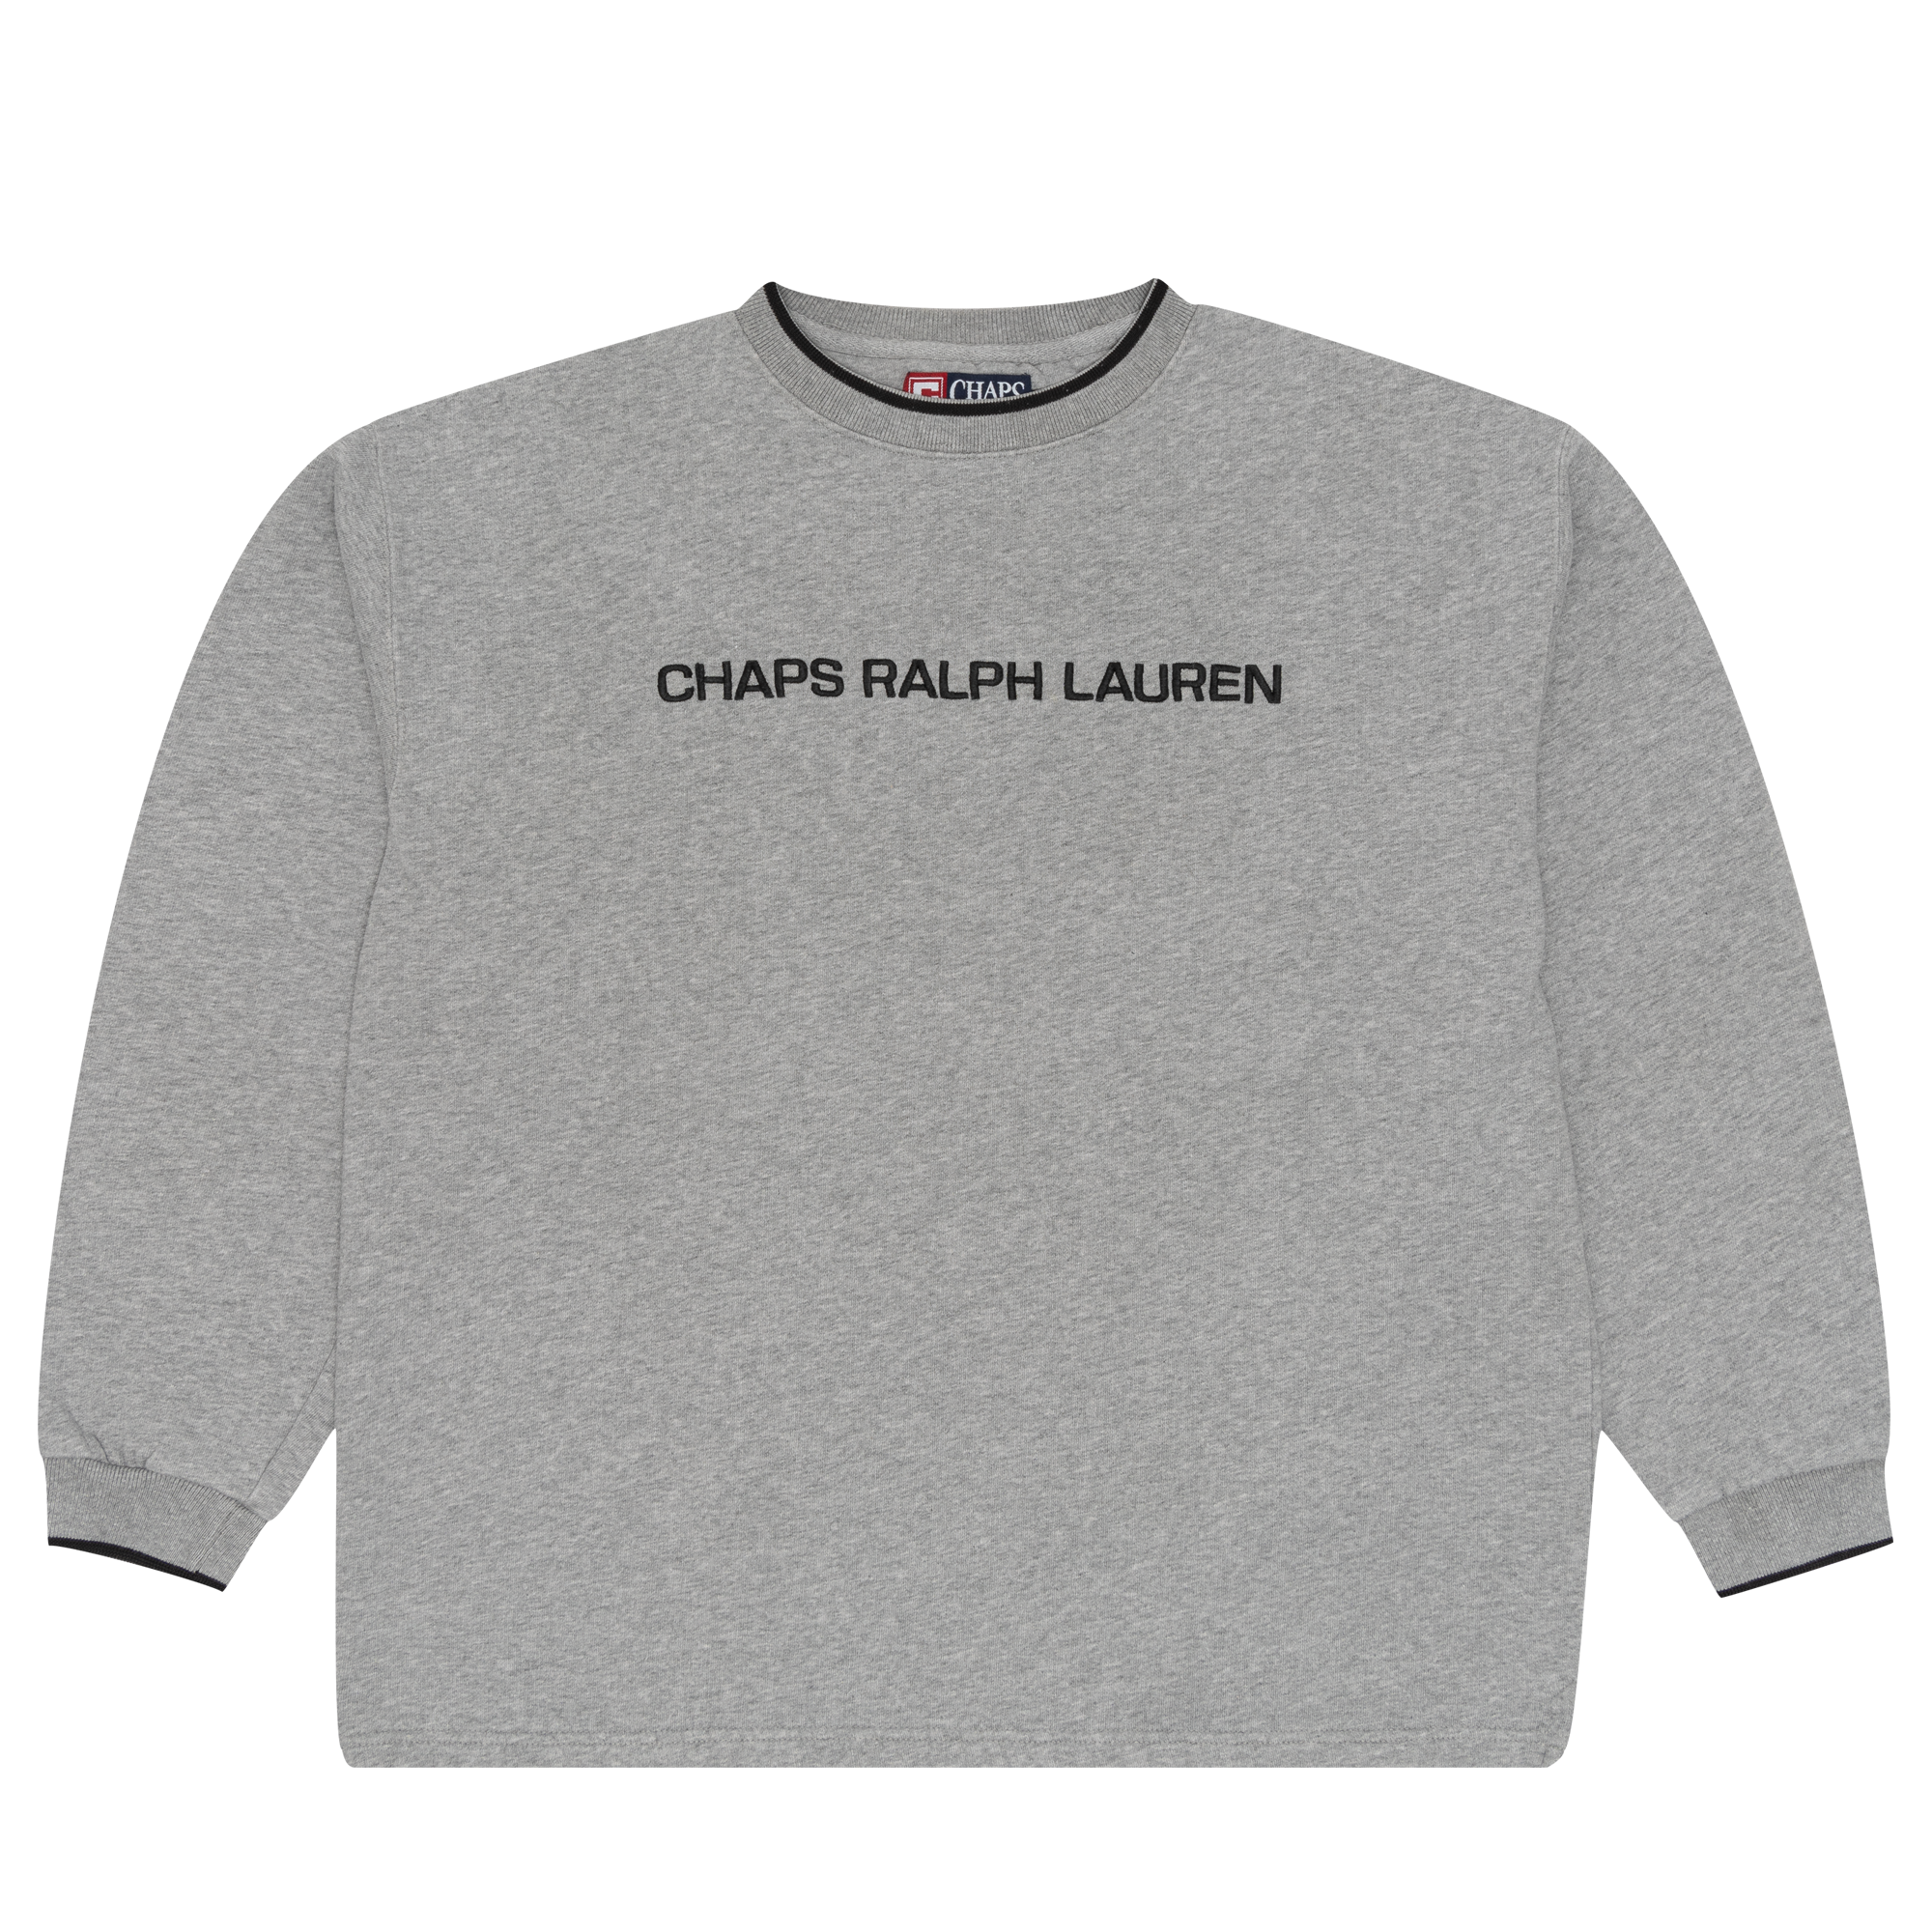 Chaps Ralph Lauren Embroidered Spellout Crewneck Grey-PLUS